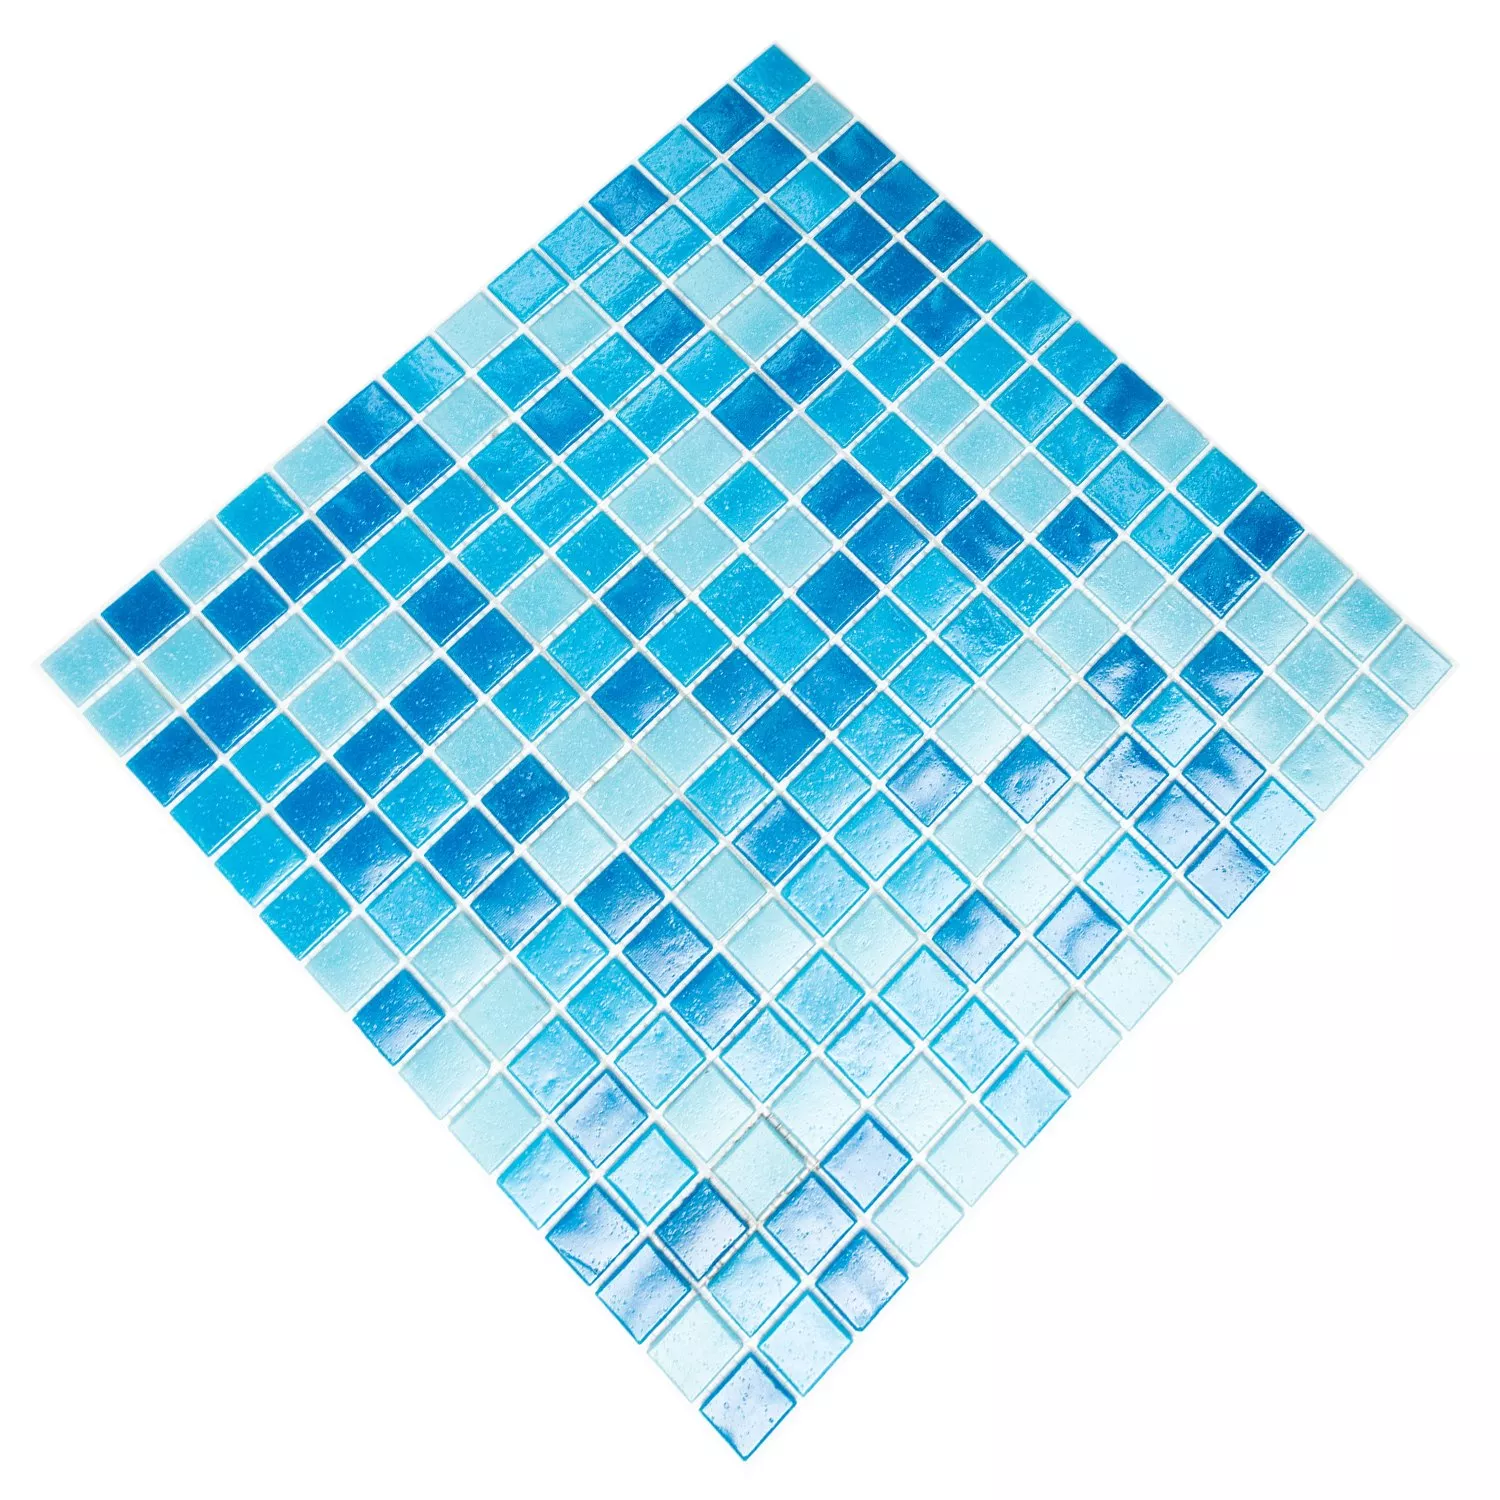 Swimmingpool Mosaik Pazifik Klistret På Papir